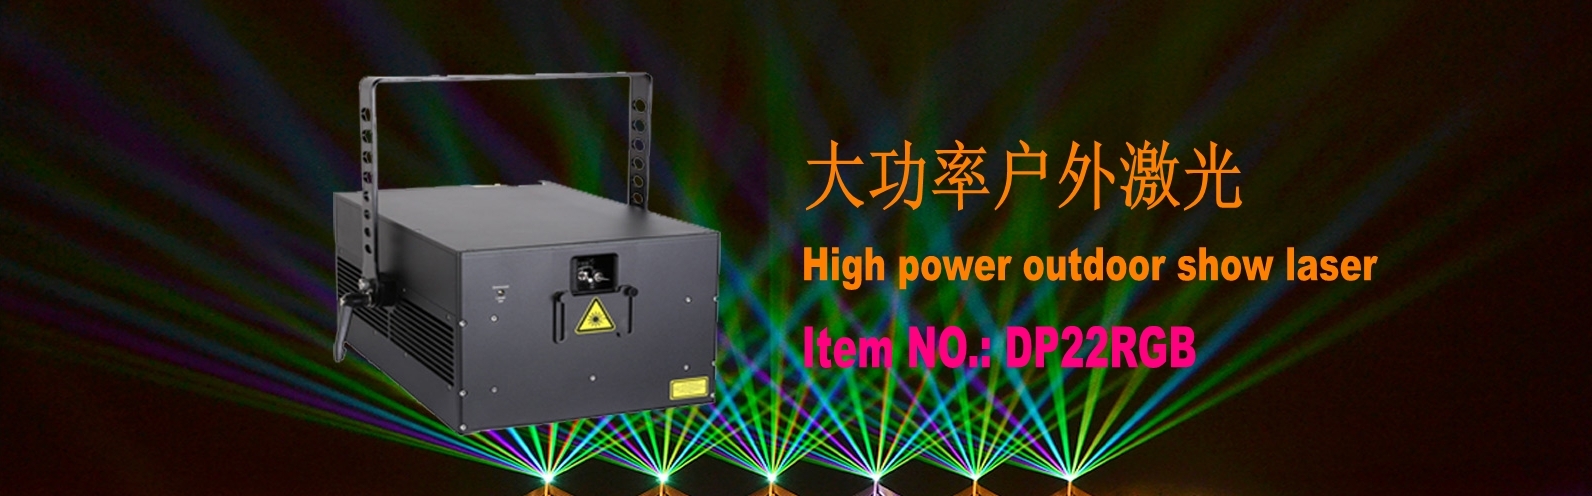 Laser display system